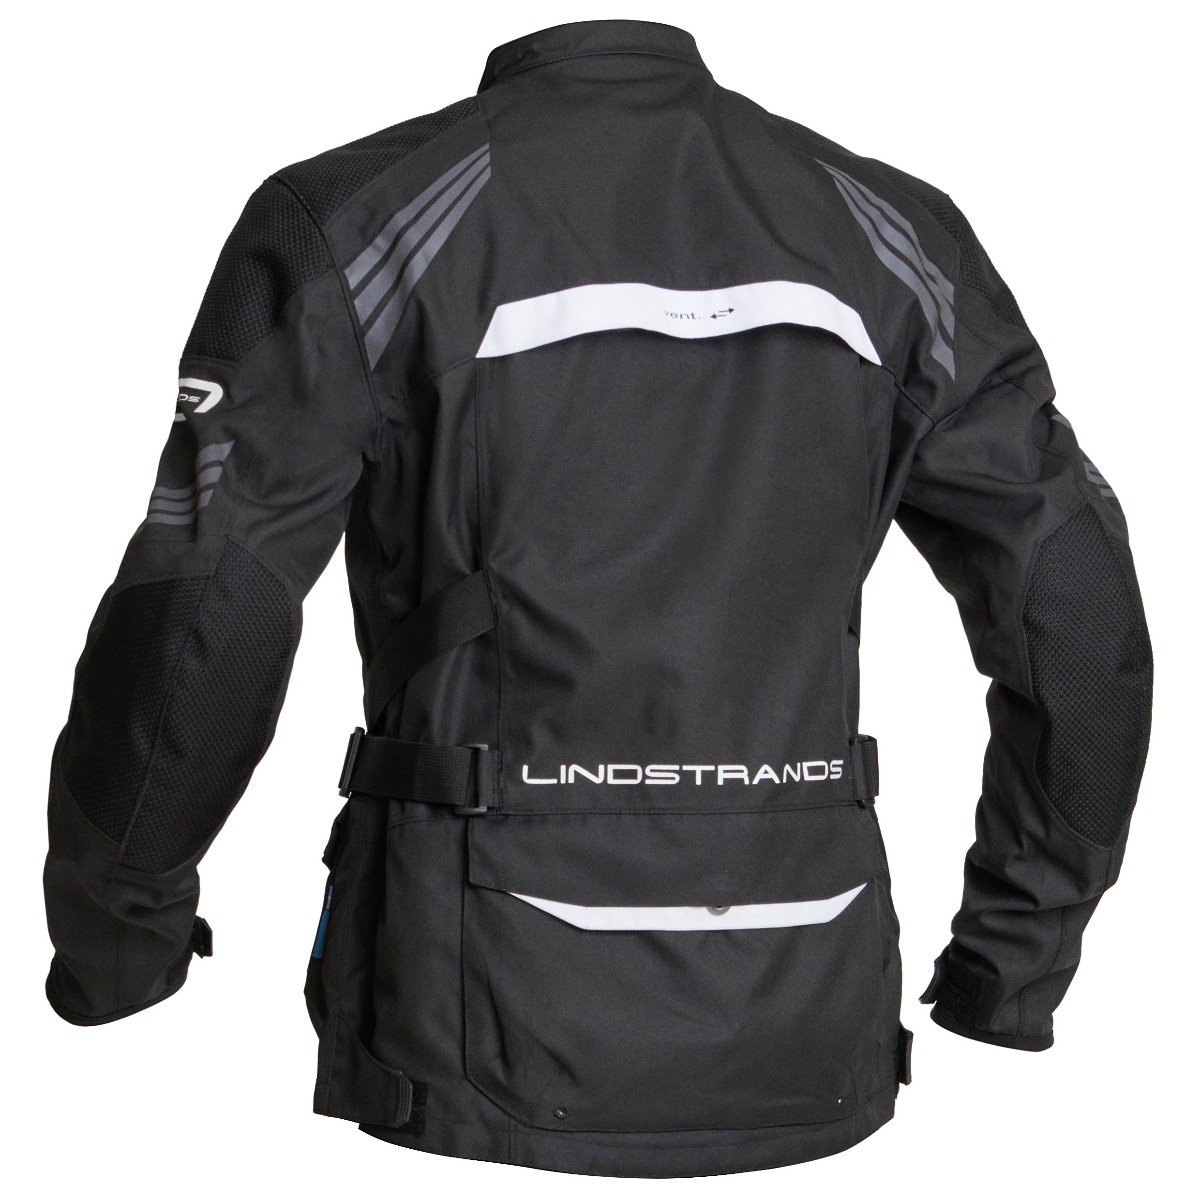 Image of Lindstrands Transtrand Jacket Black White Size 54 ID 6438235187885